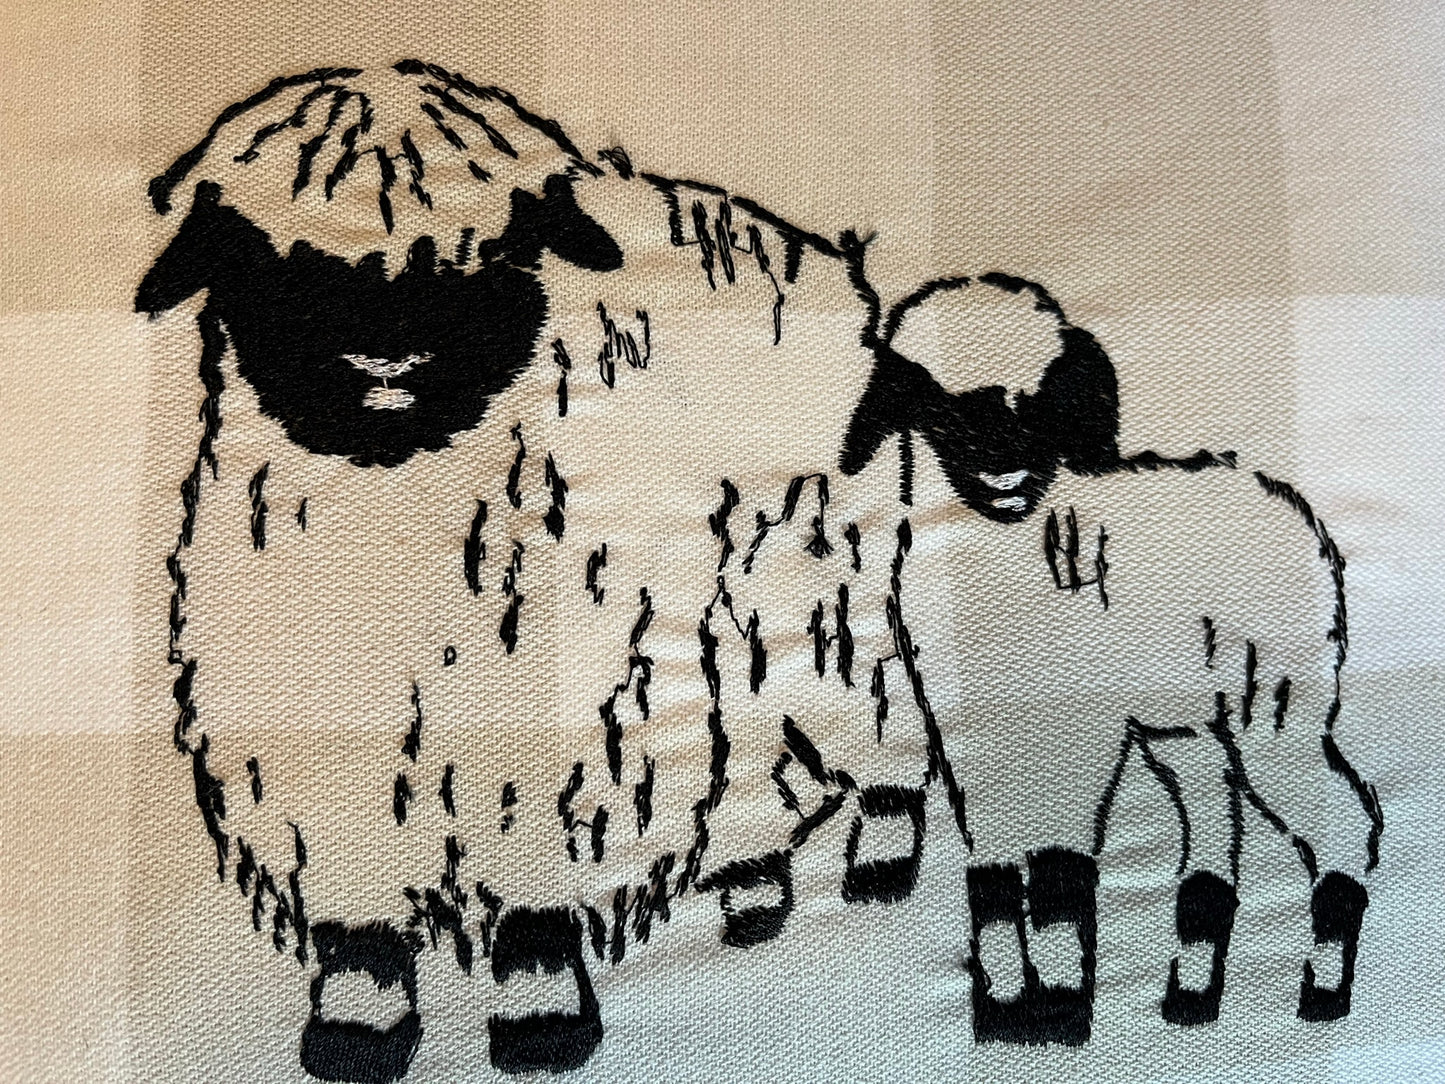 Blacknose sheep cushion cover, two sheep, beige/white